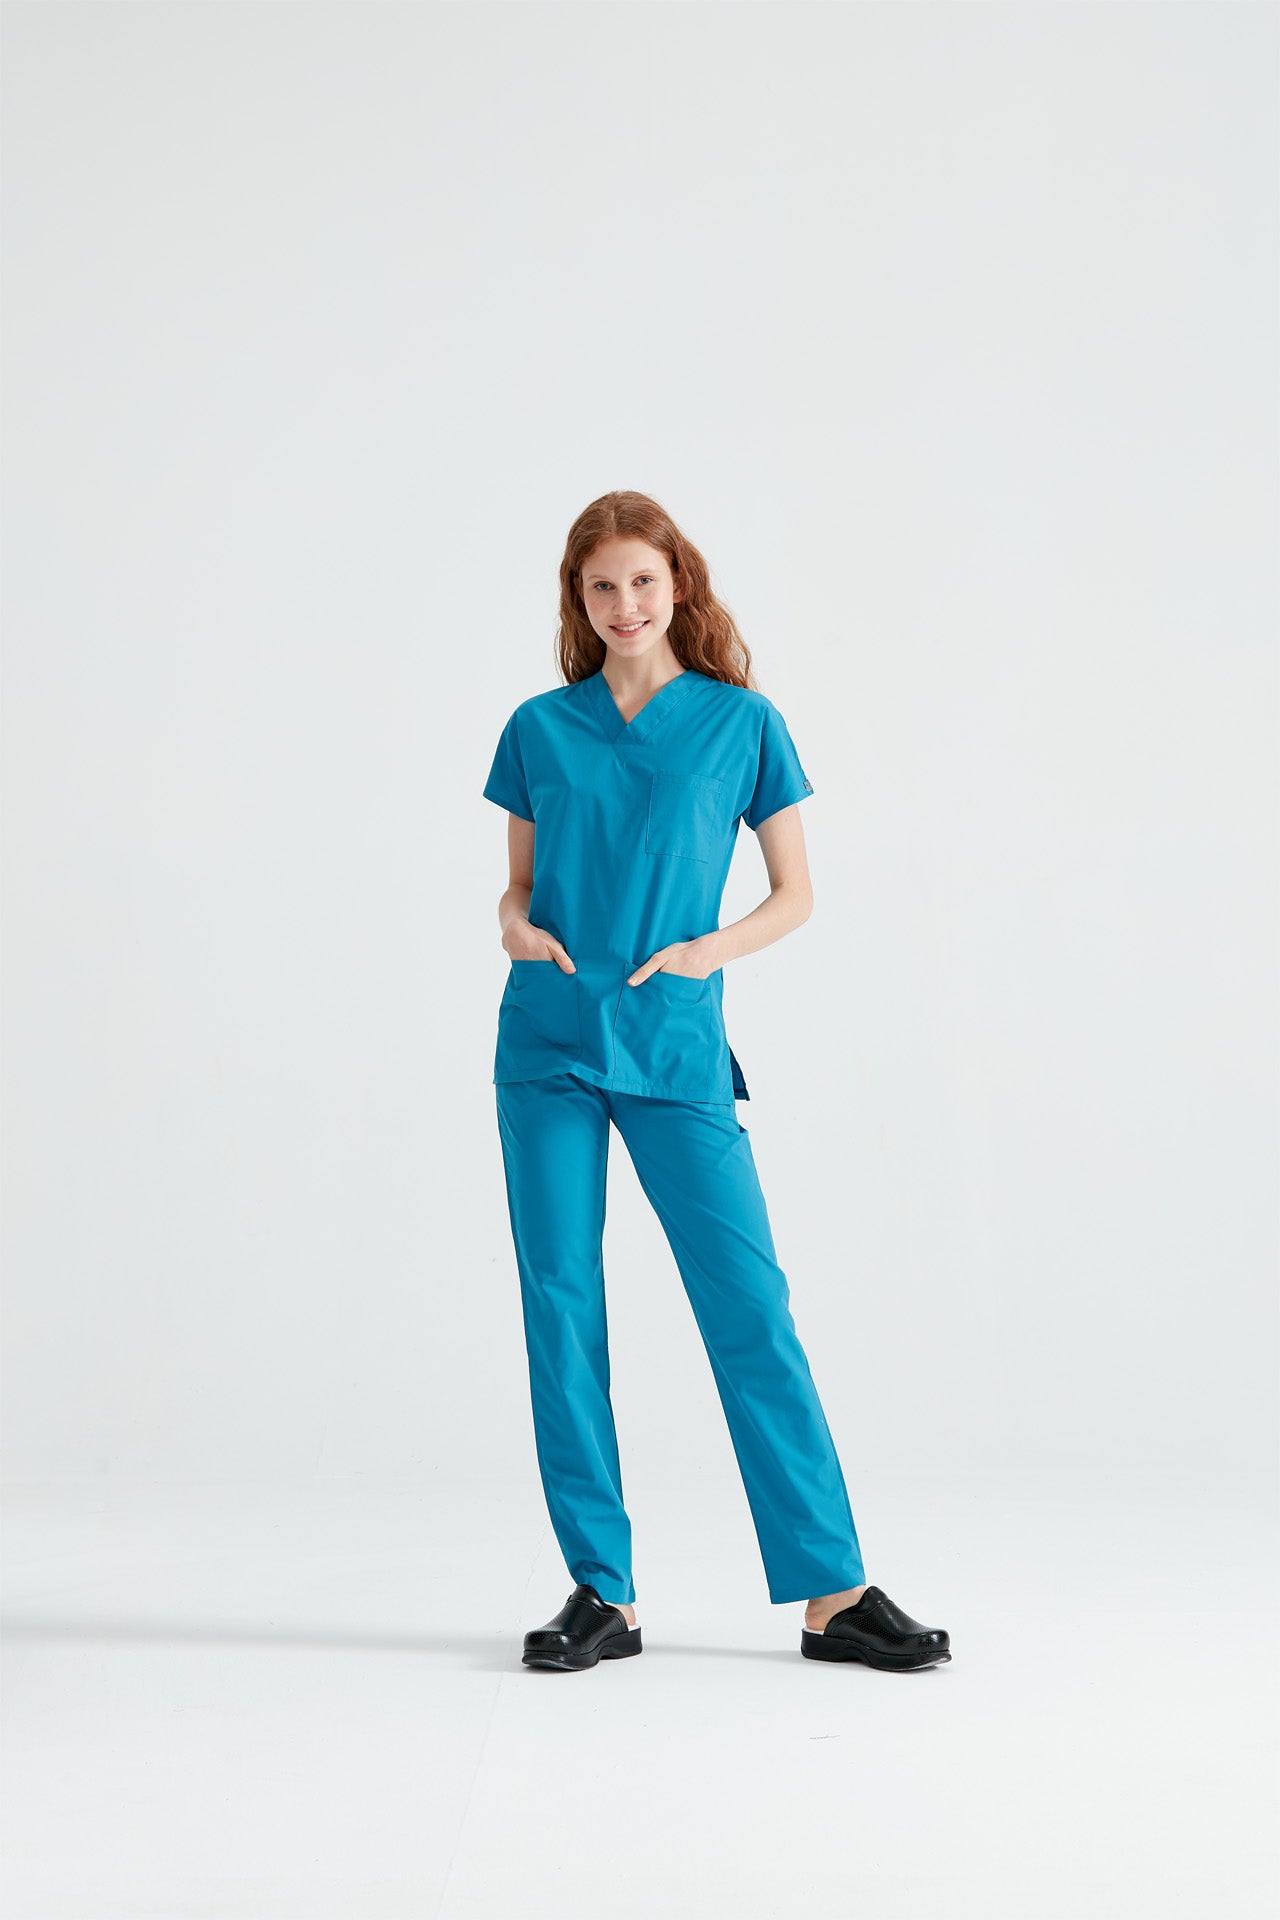 Asistenta medicala imbracata in costum medical elastan Dark Turquoise, cu mainile in buzunar, vedere din fata